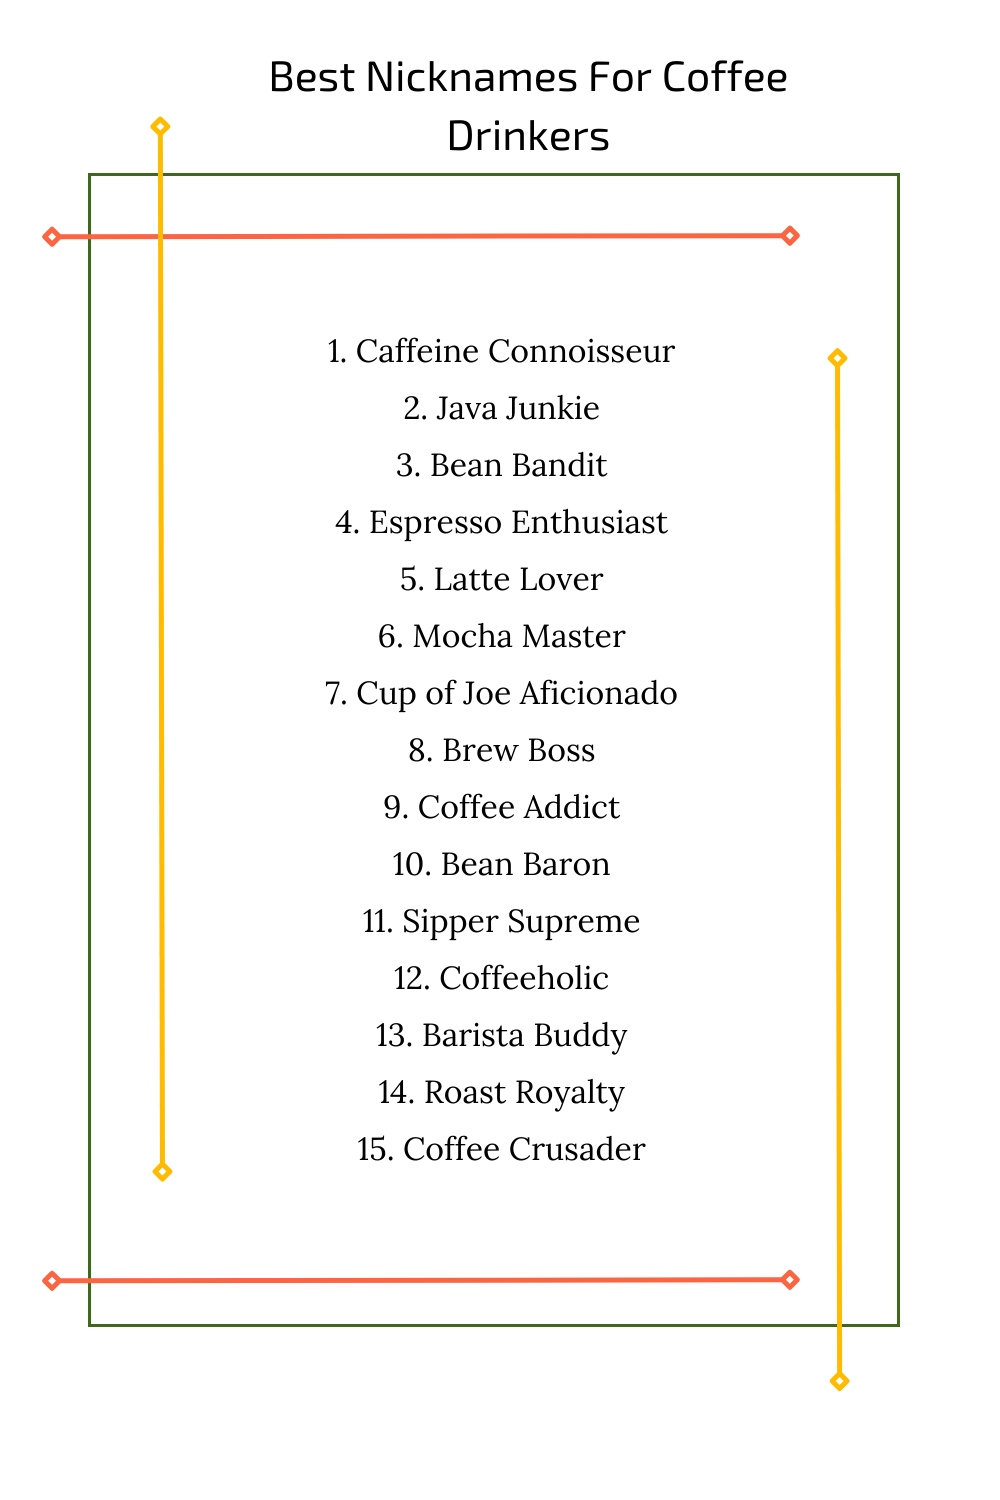 Best Nicknames For Coffee Drinkers